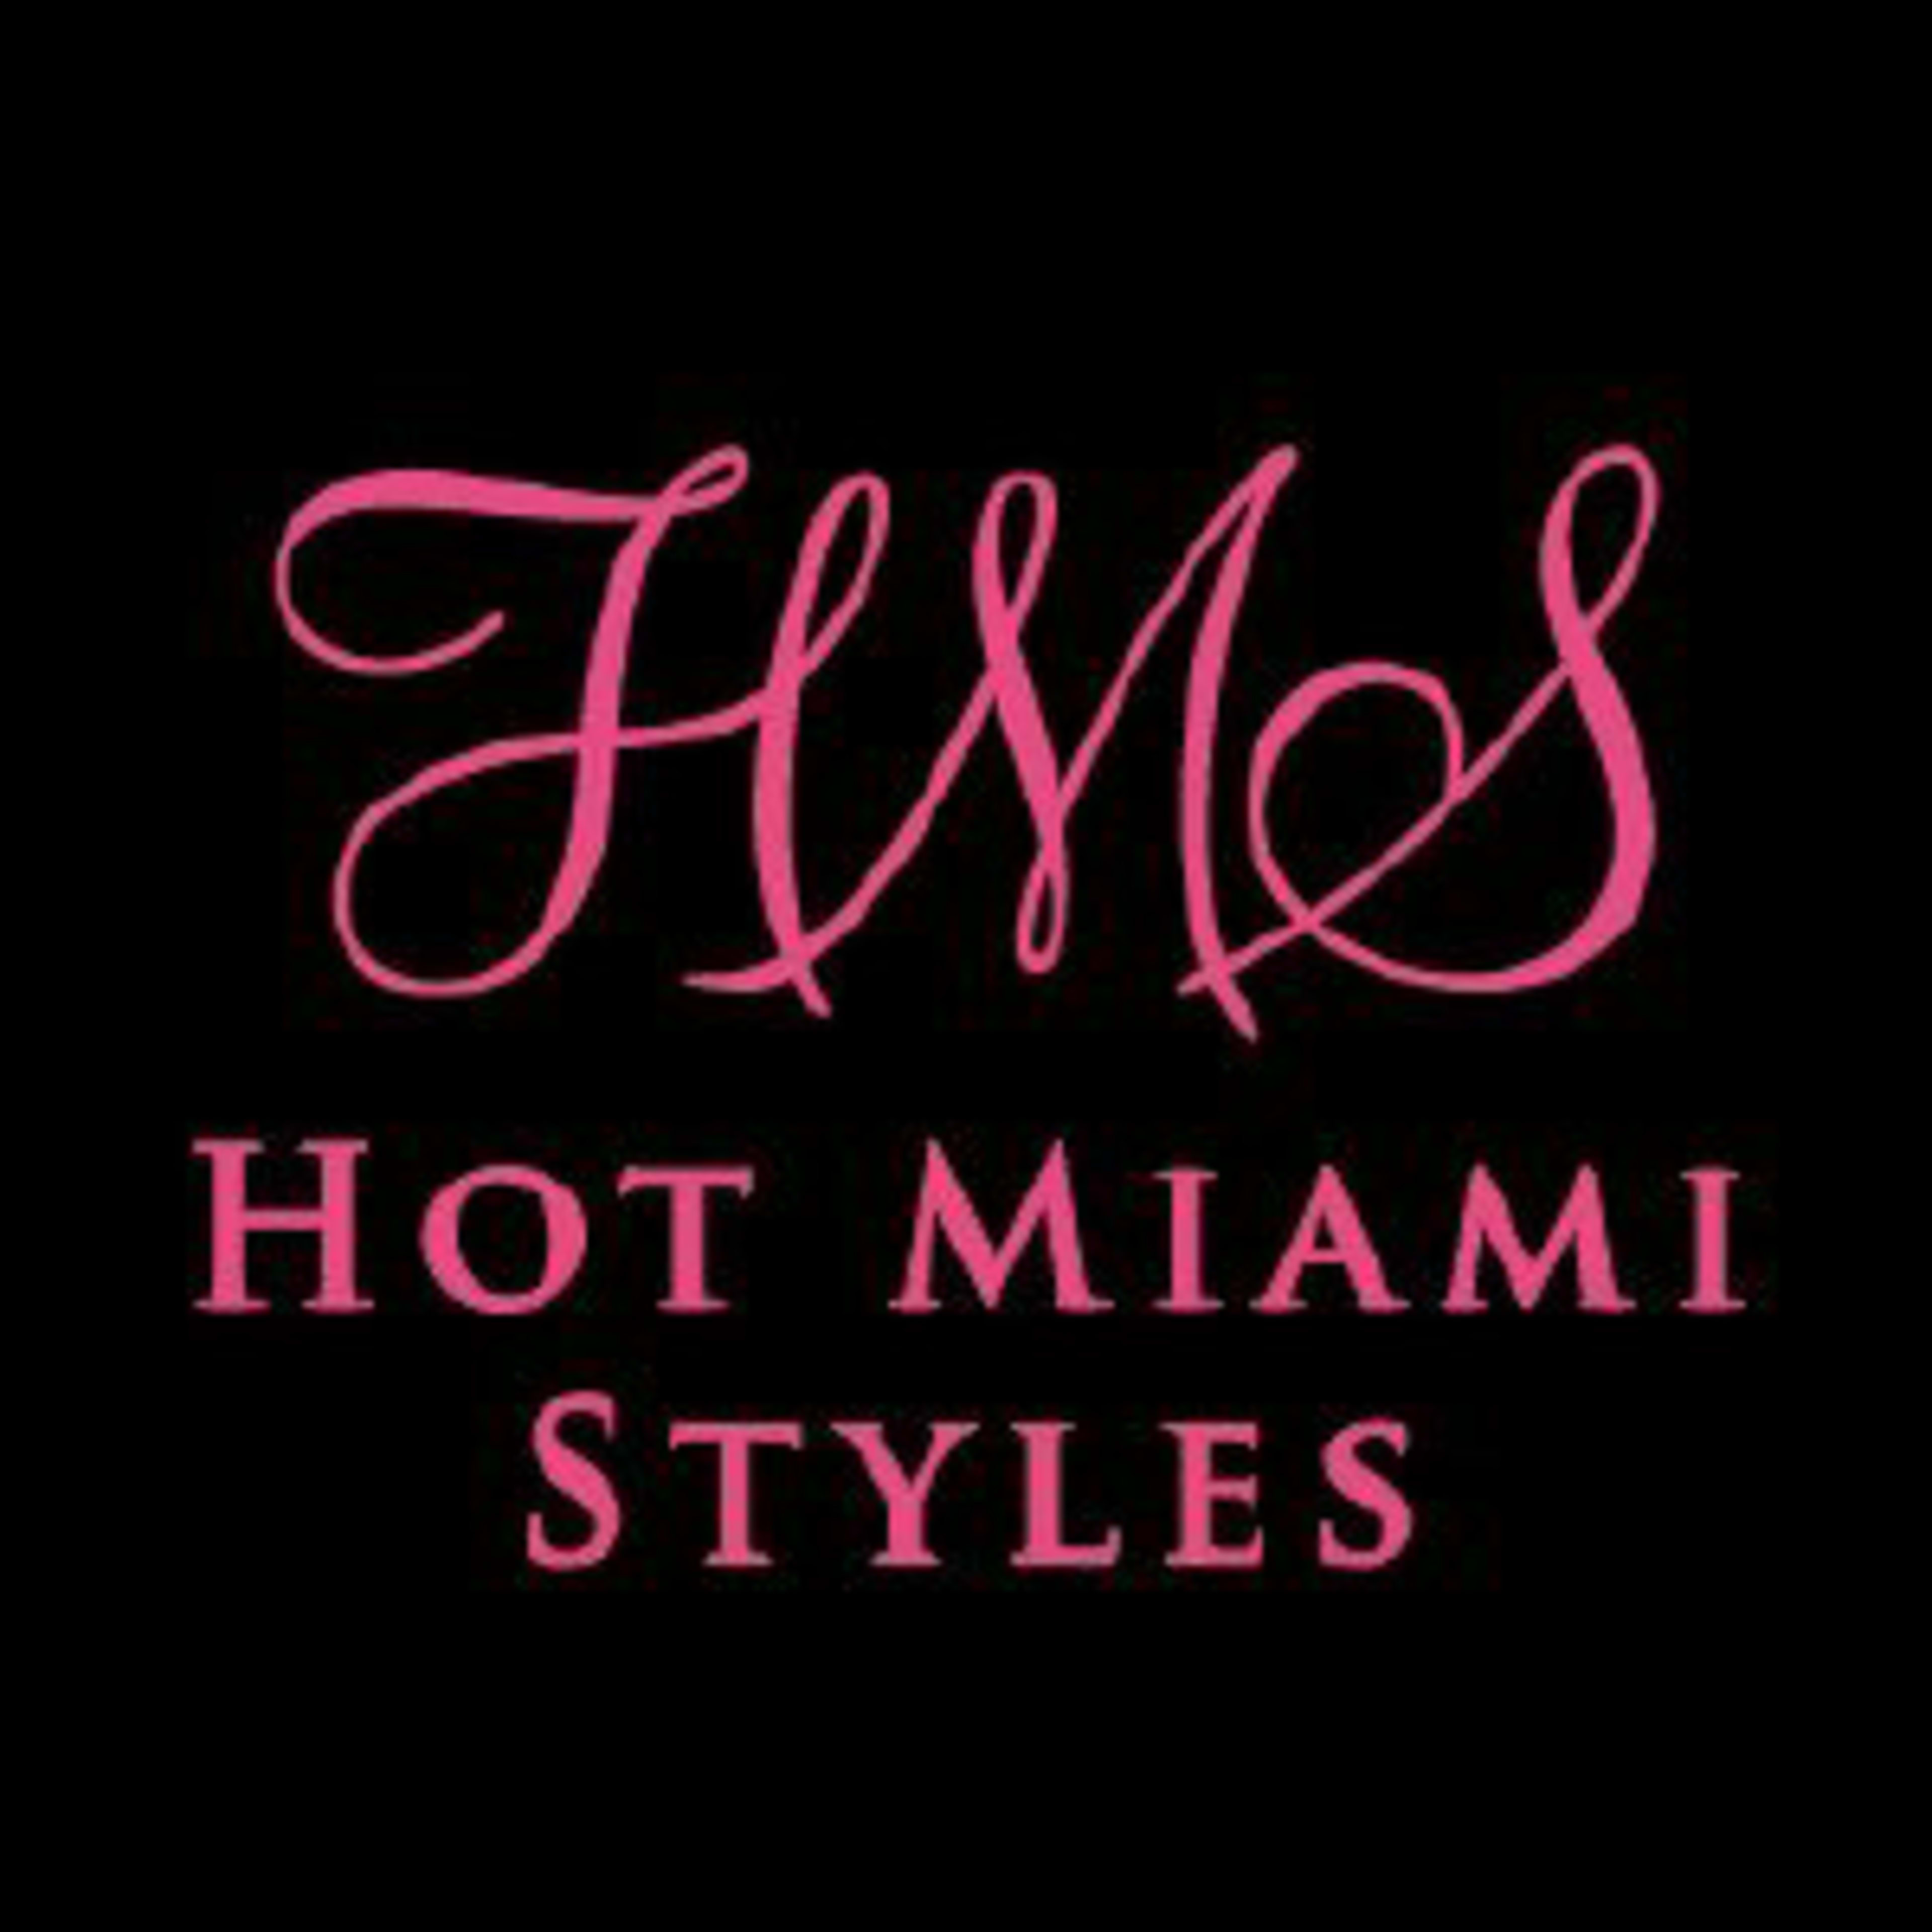 Hot Miami StylesCode